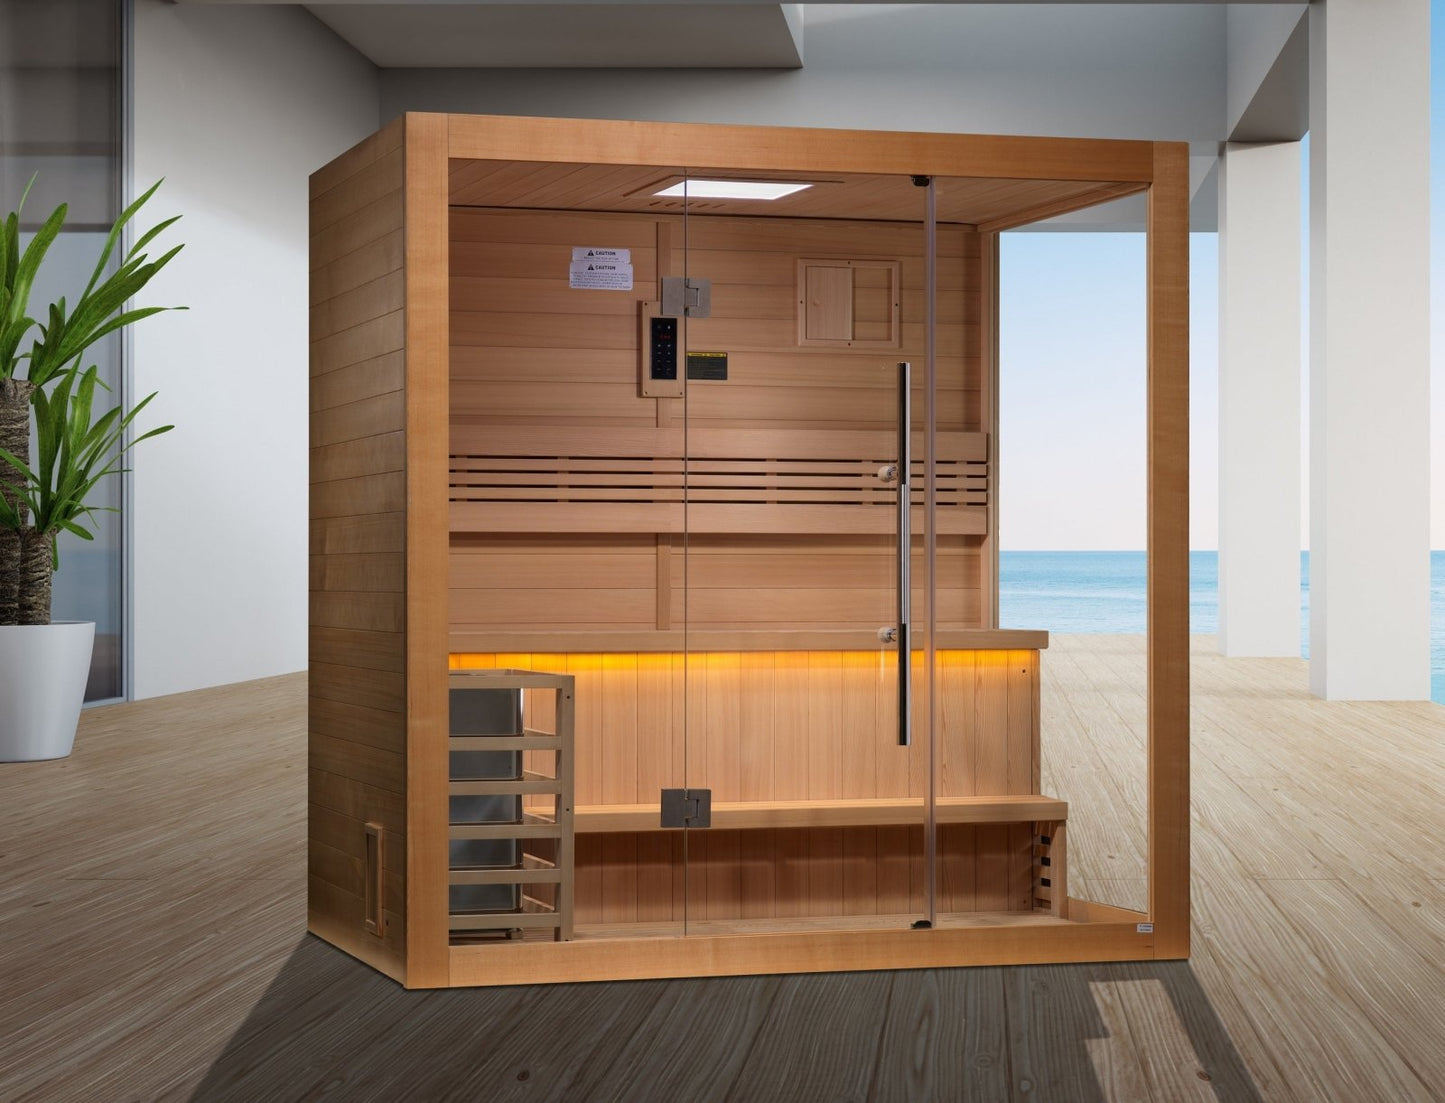 Golden Designs 3-Person "Forssa" Traditional Sauna - corner unit with Hemlock | GDI-7203-01 - GDI-7203-01